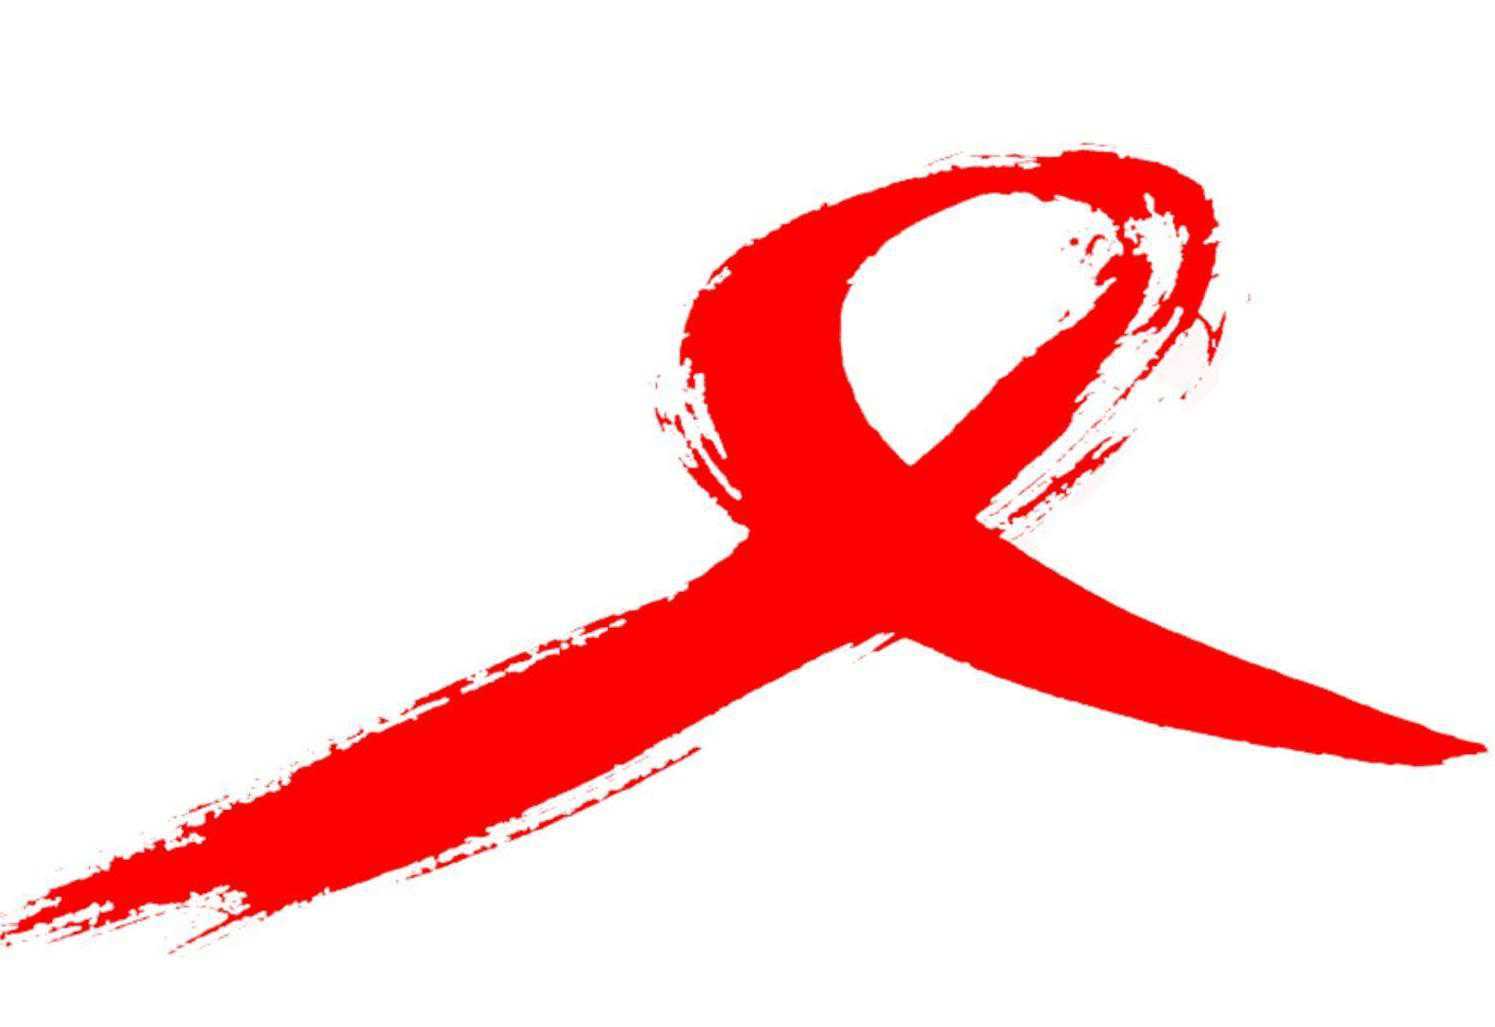 Круг спид. Ленточка СПИД. Ленточка ВИЧ на прозрачном фоне. СПИД лого. Красная ленточка без фона.